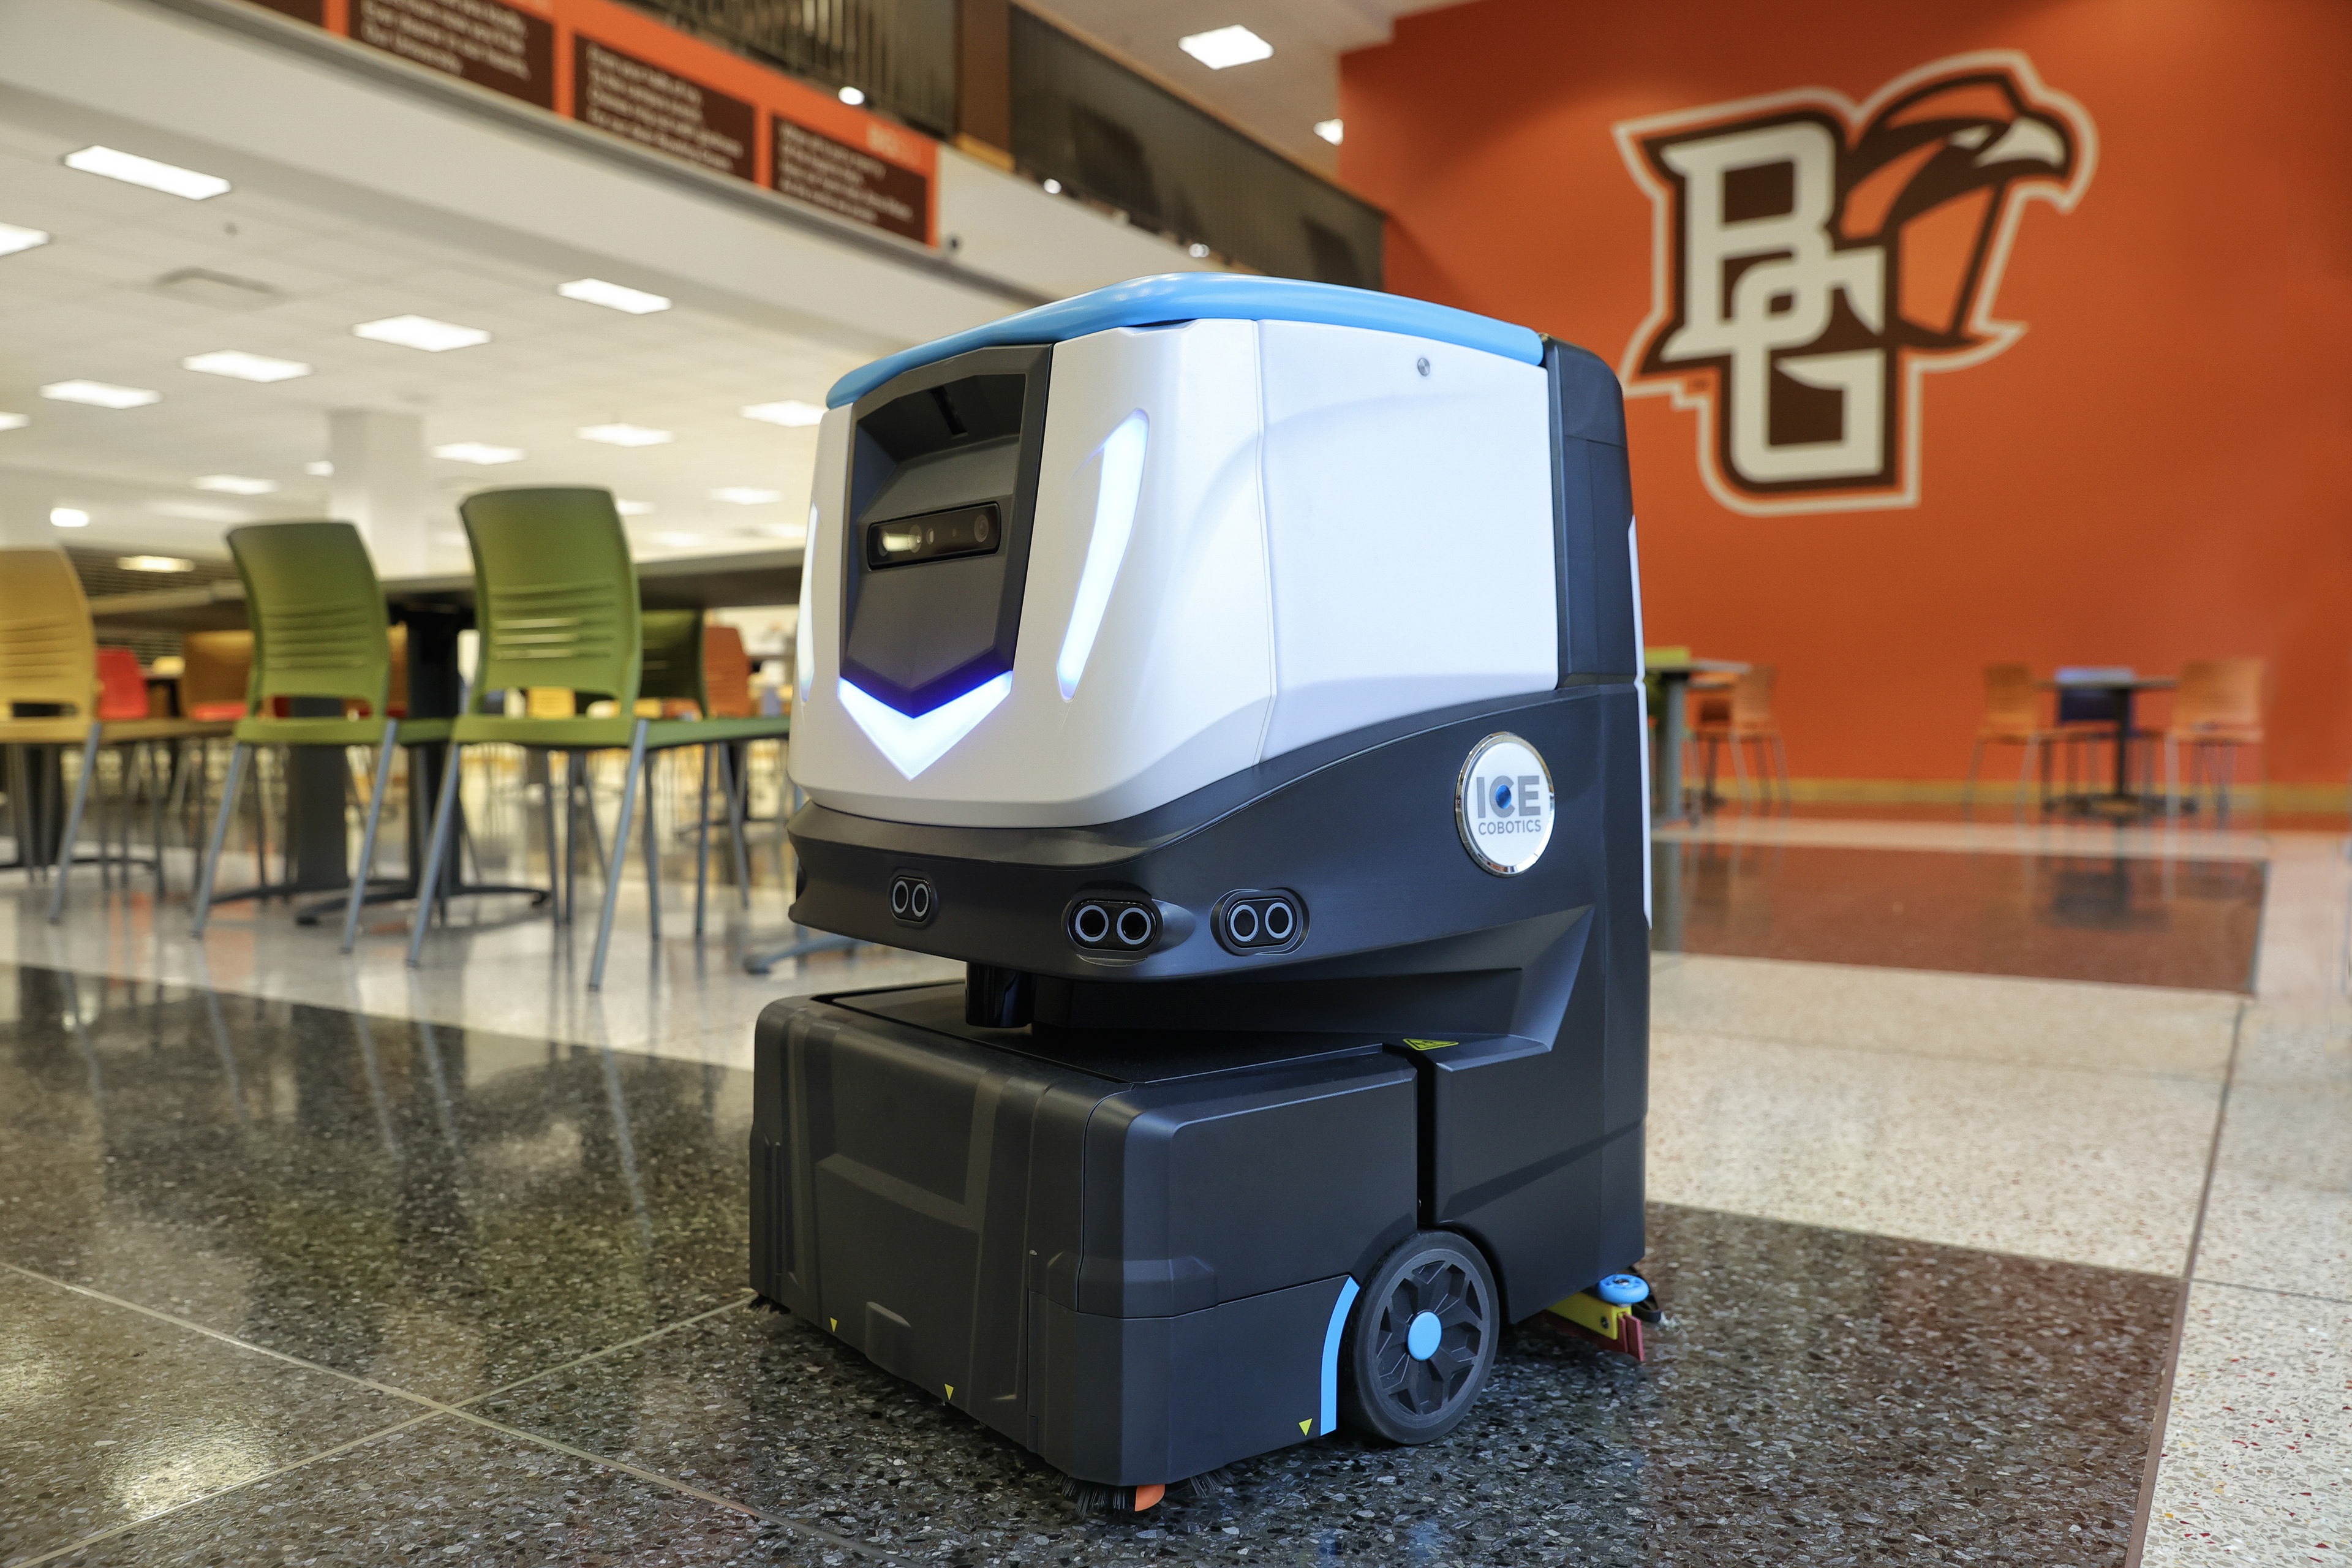 ICE Cobotics floor-scrubbing robot Cobi 18 cleans the Bowen-Thompson Student Union 